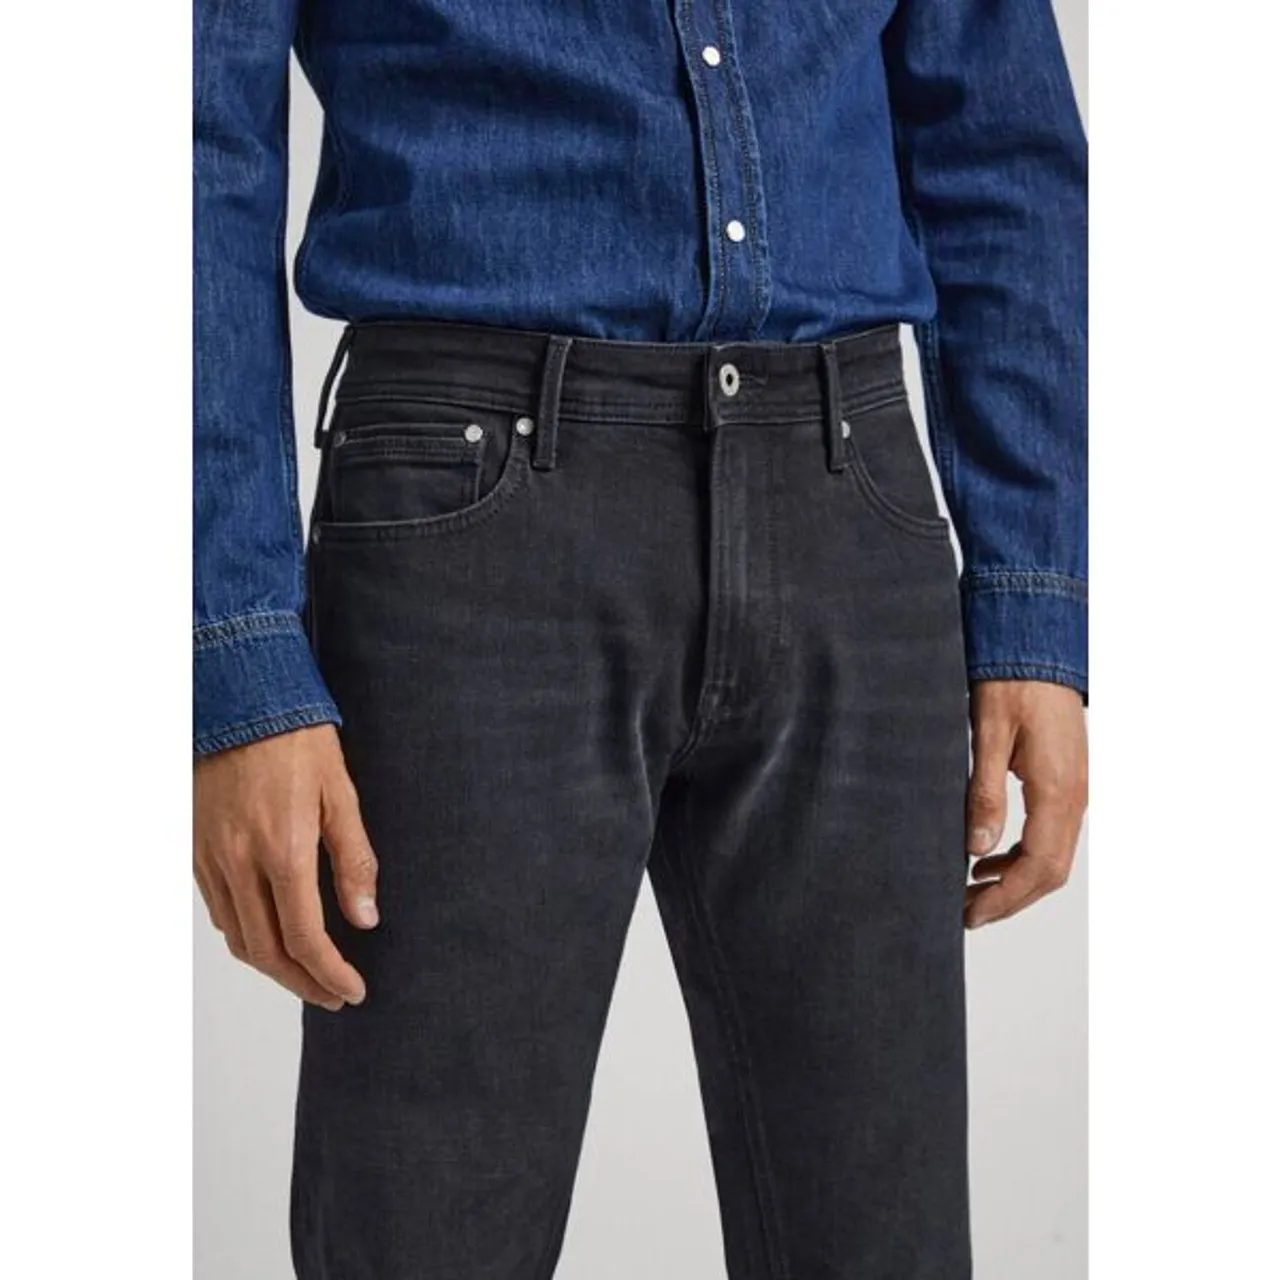 Regular-fit-Jeans PEPE JEANS "STANLEY" Gr. 33, Länge 34, schwarz (black) Herren Jeans Regular Fit